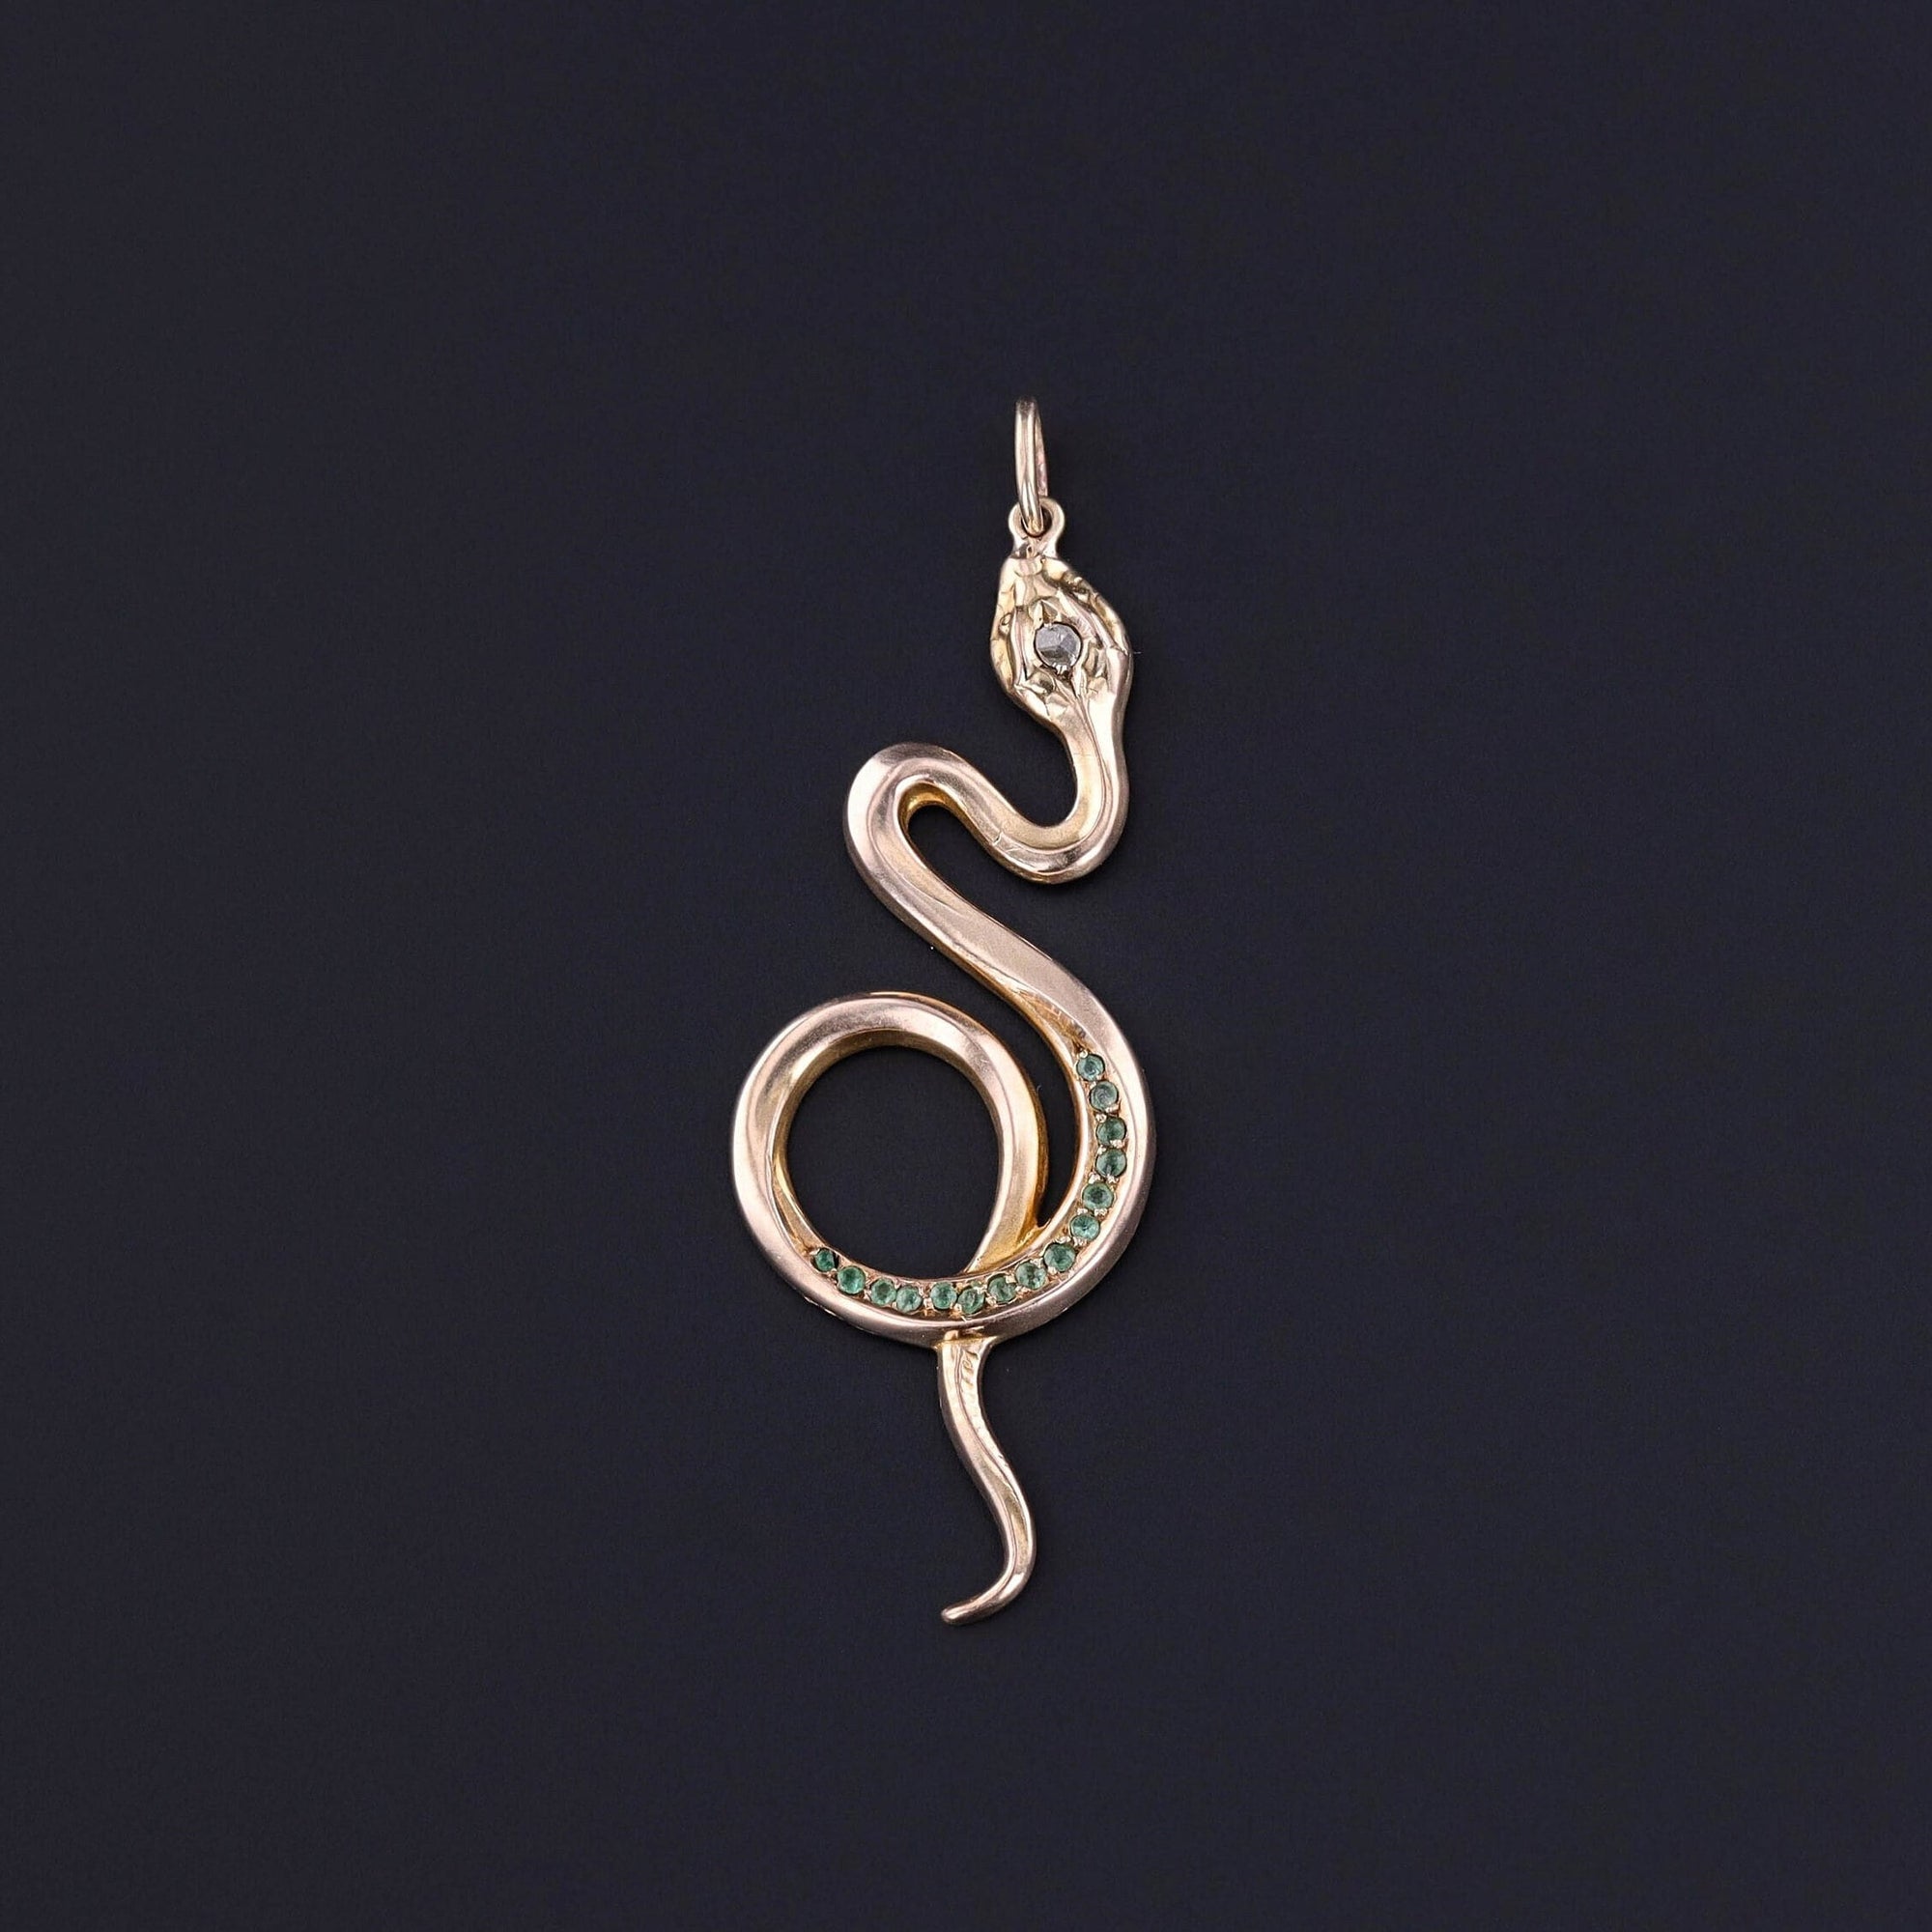 Antique Snake Pendant of 18k Gold